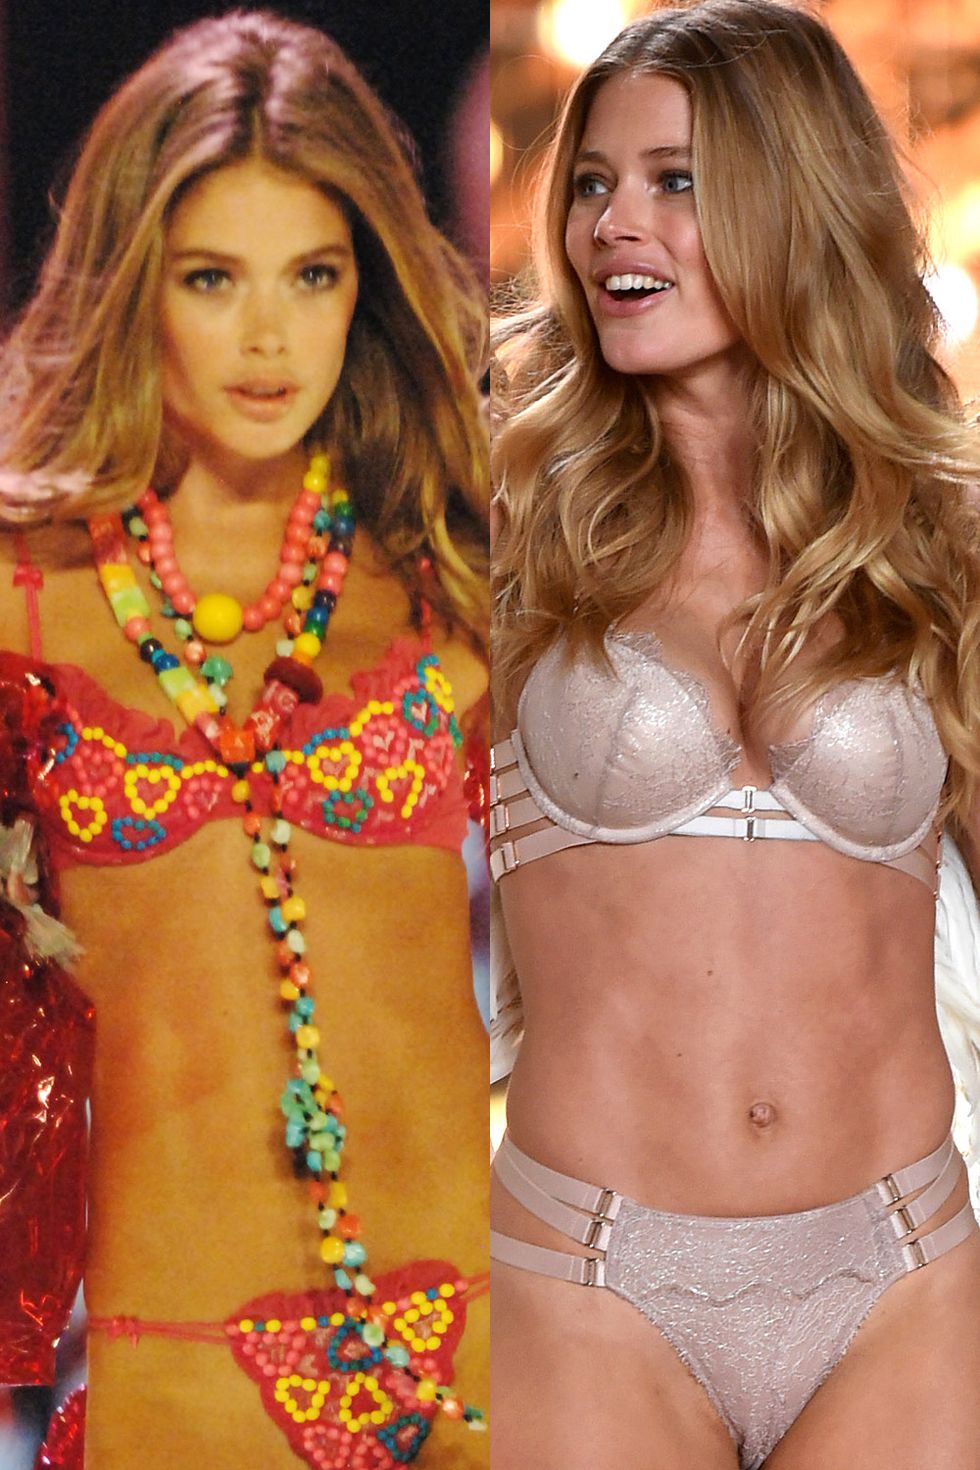 Victoria's Secret Models: Then and Now